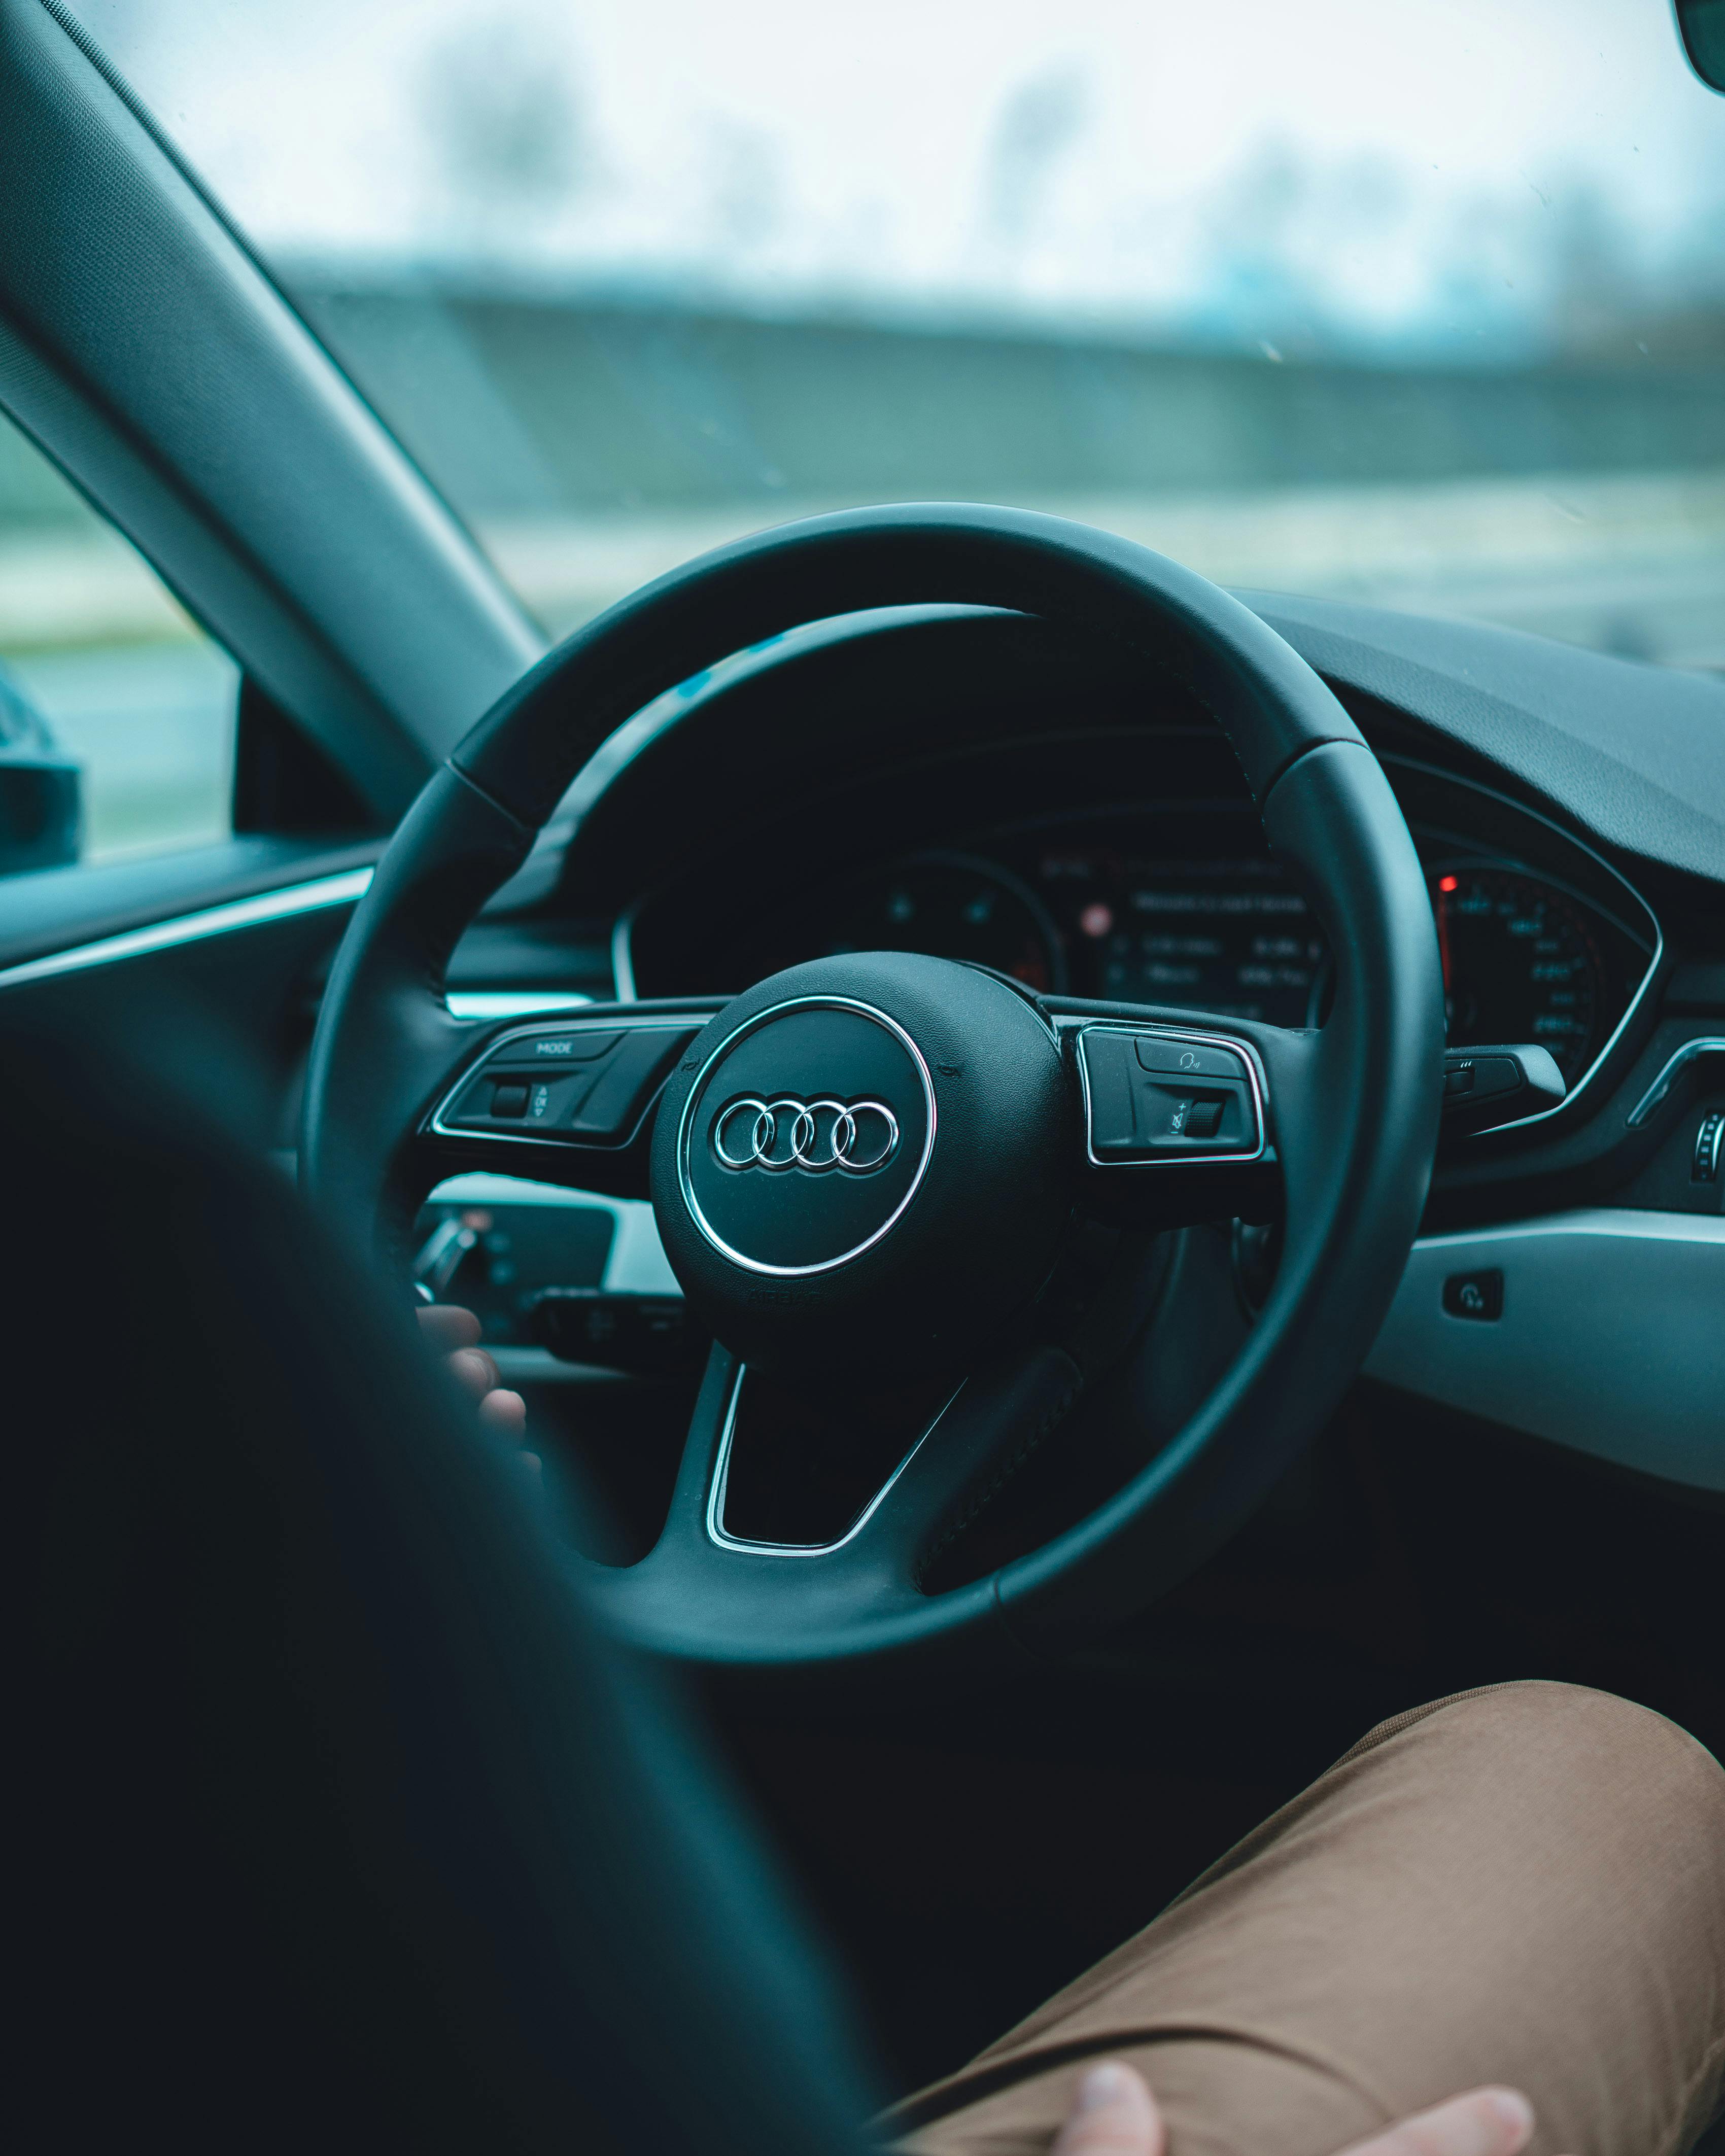 Audi Car Photos, Download The BEST Free Audi Car Stock Photos & HD Images